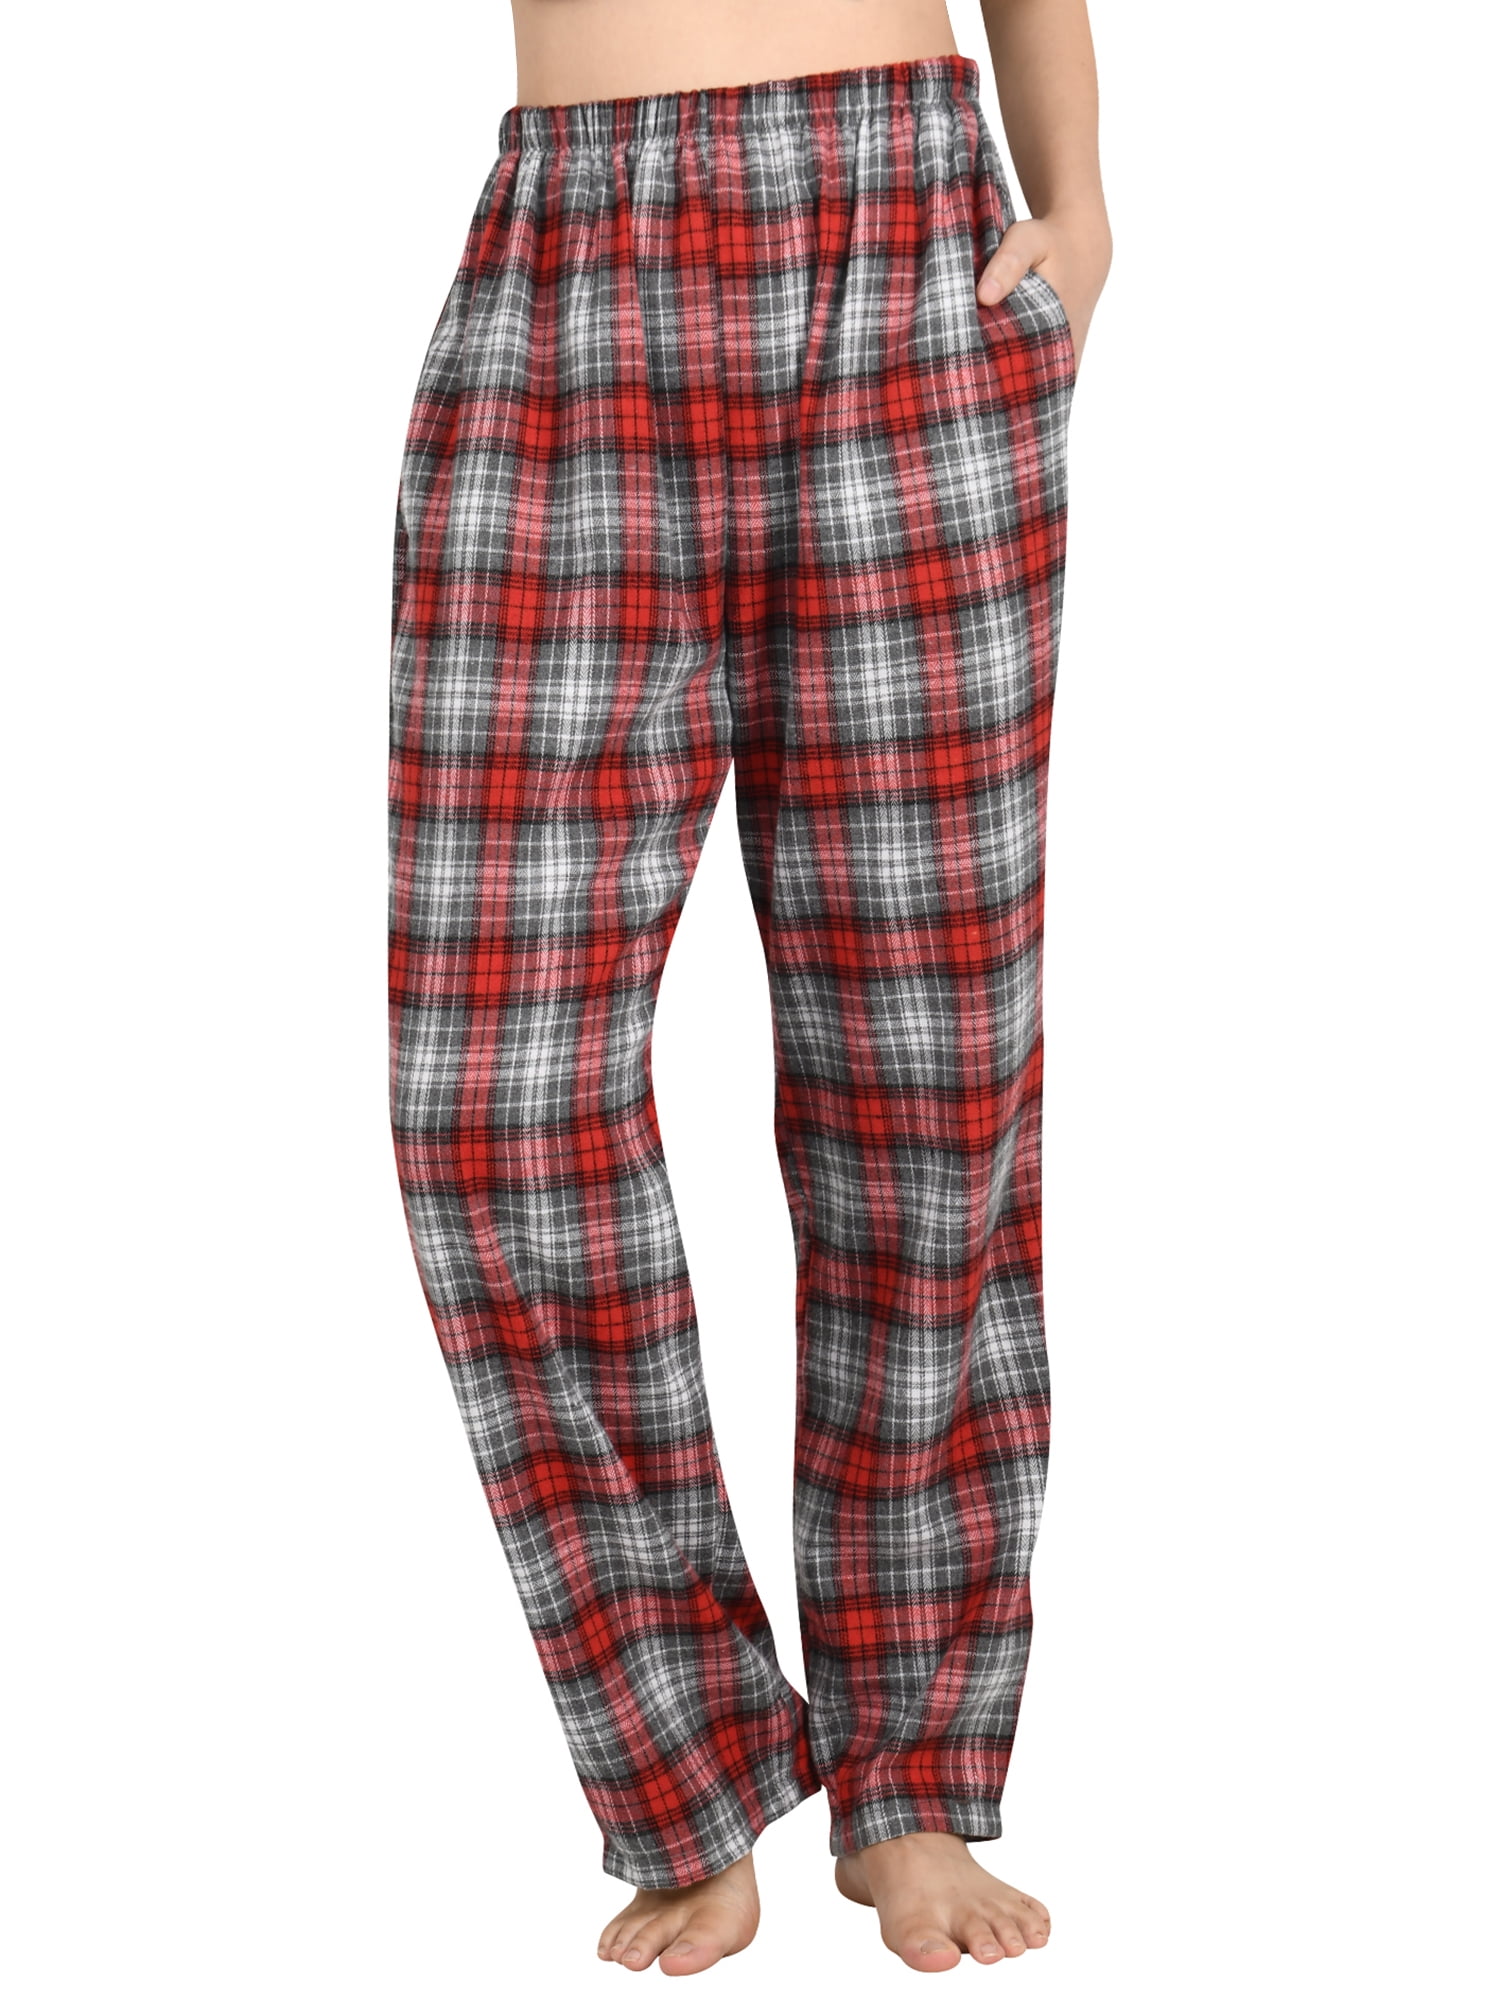 Lochas Women Flannel Pajama Pants Fleece Sleep Bottoms Xmas Plaid Trousers  with Pockets Loungewaer Christmas Sleepwear